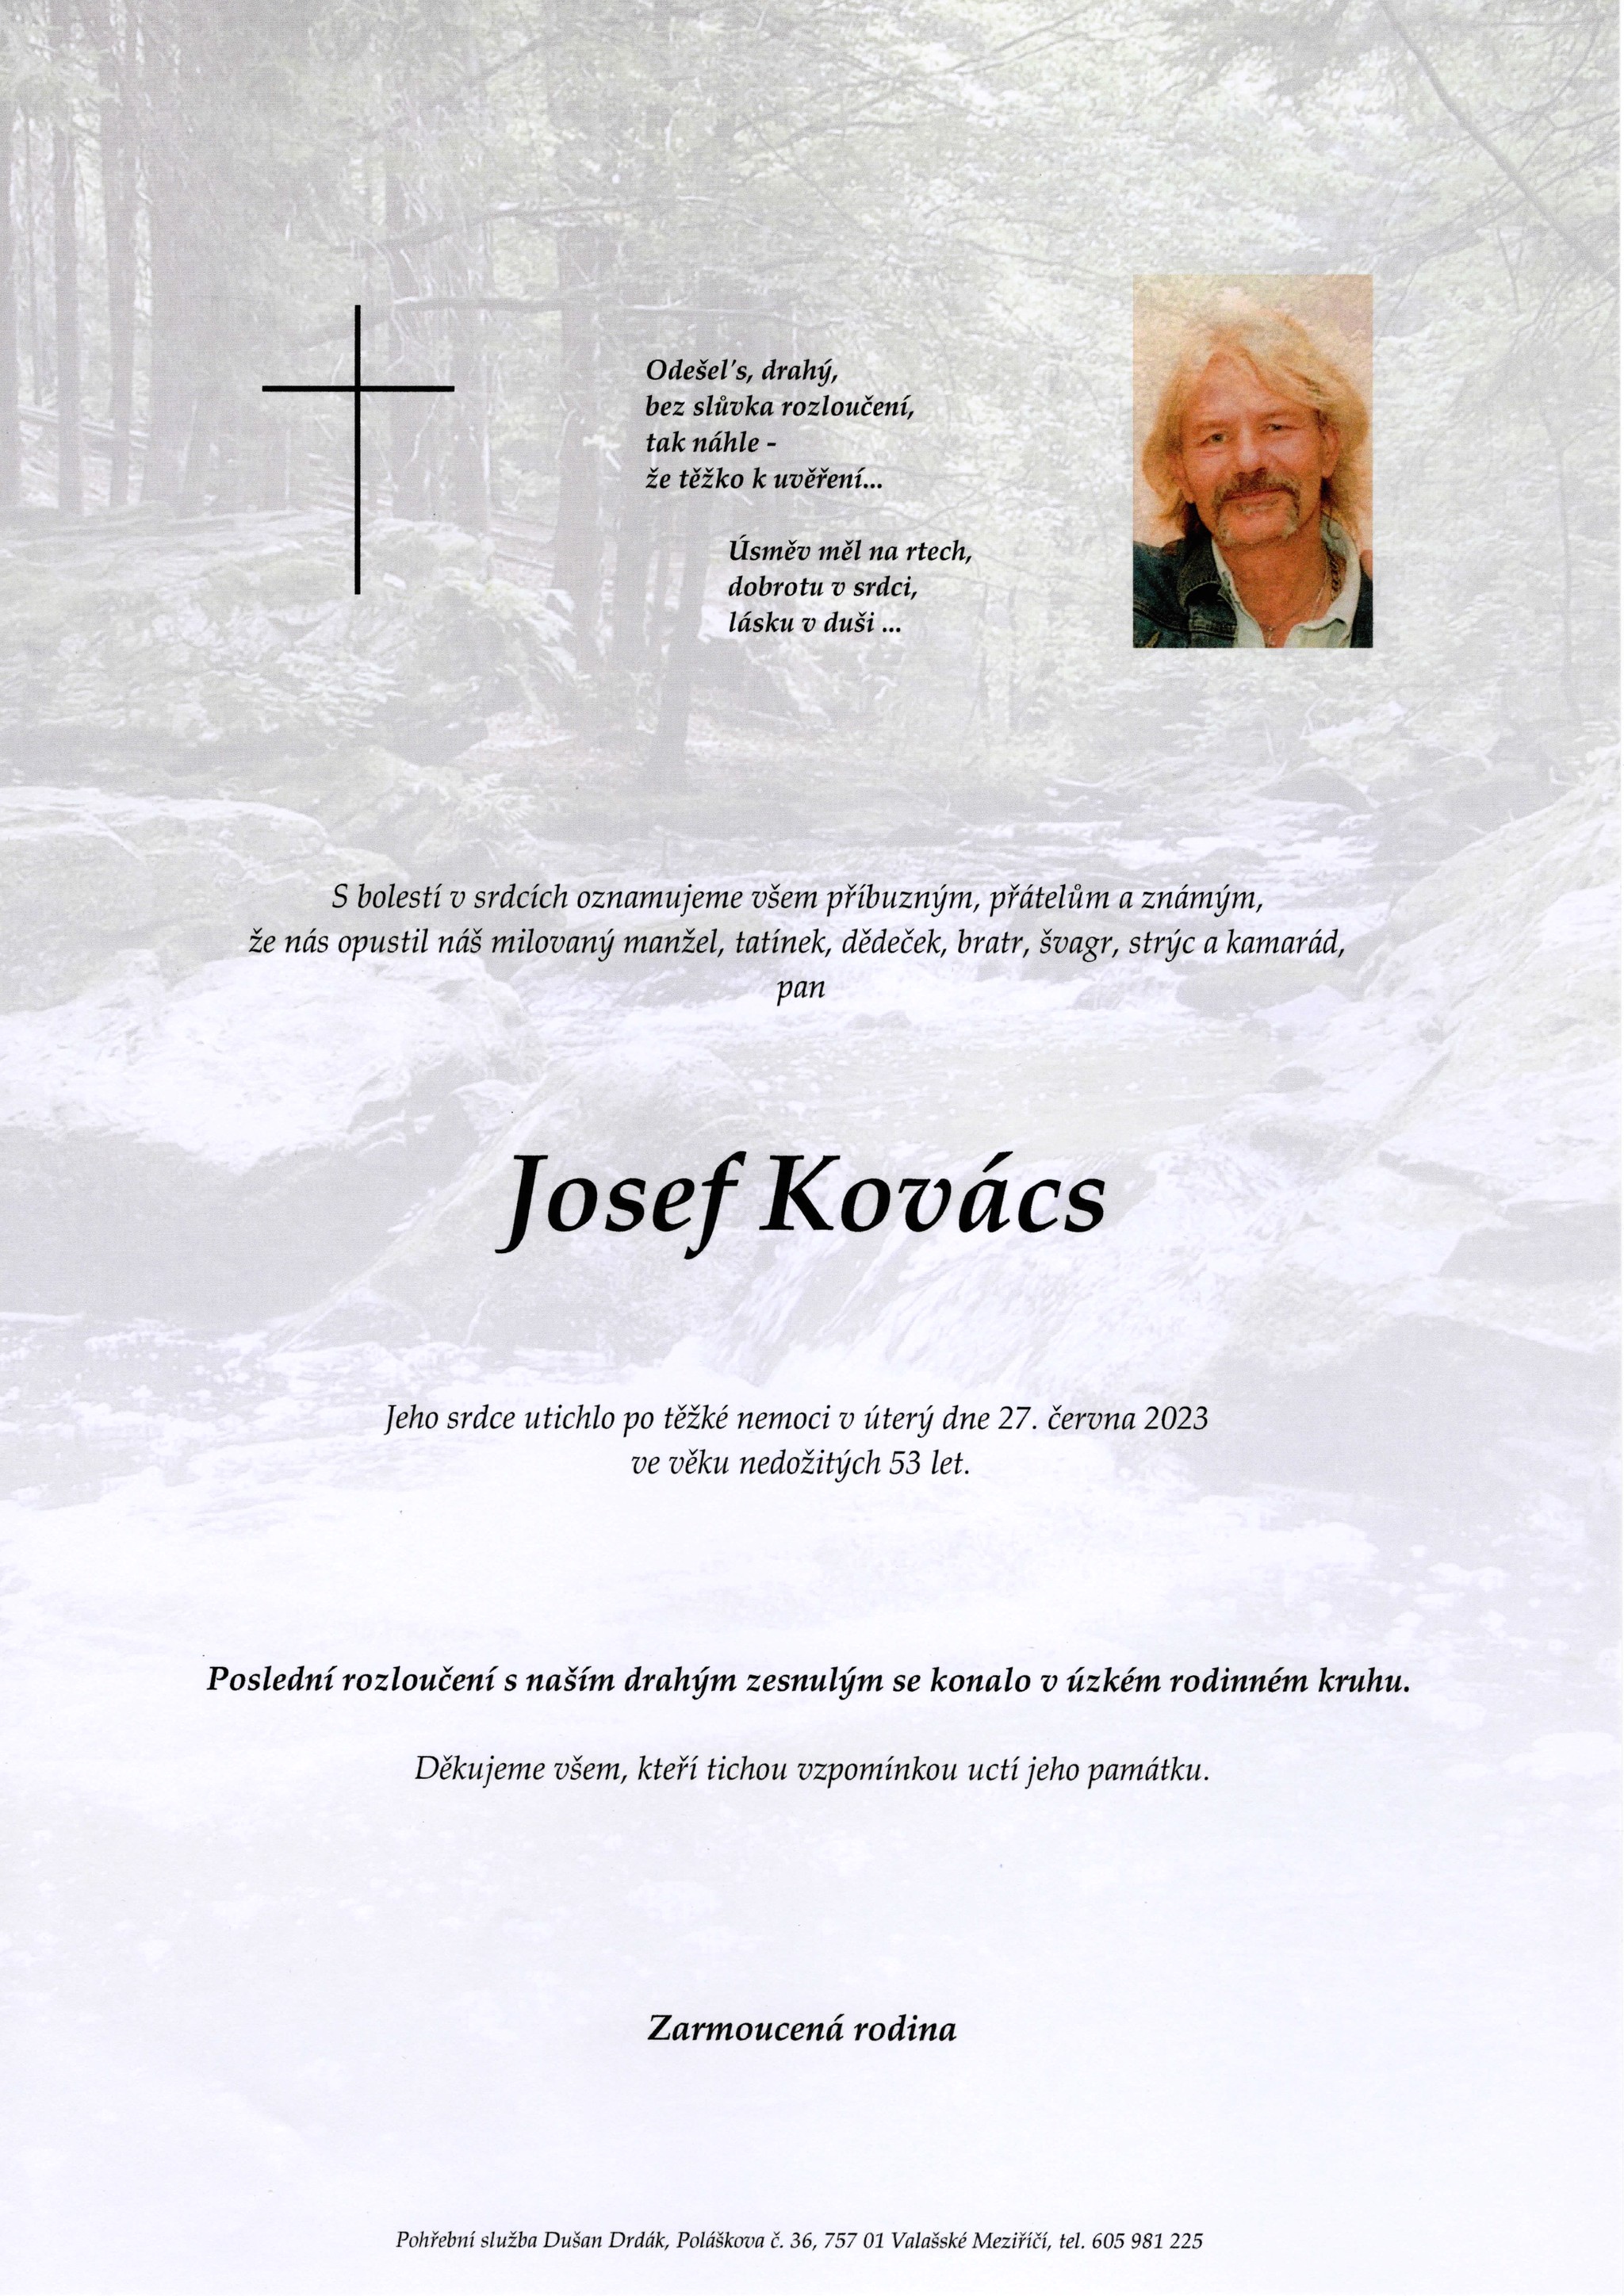 Josef Kovács